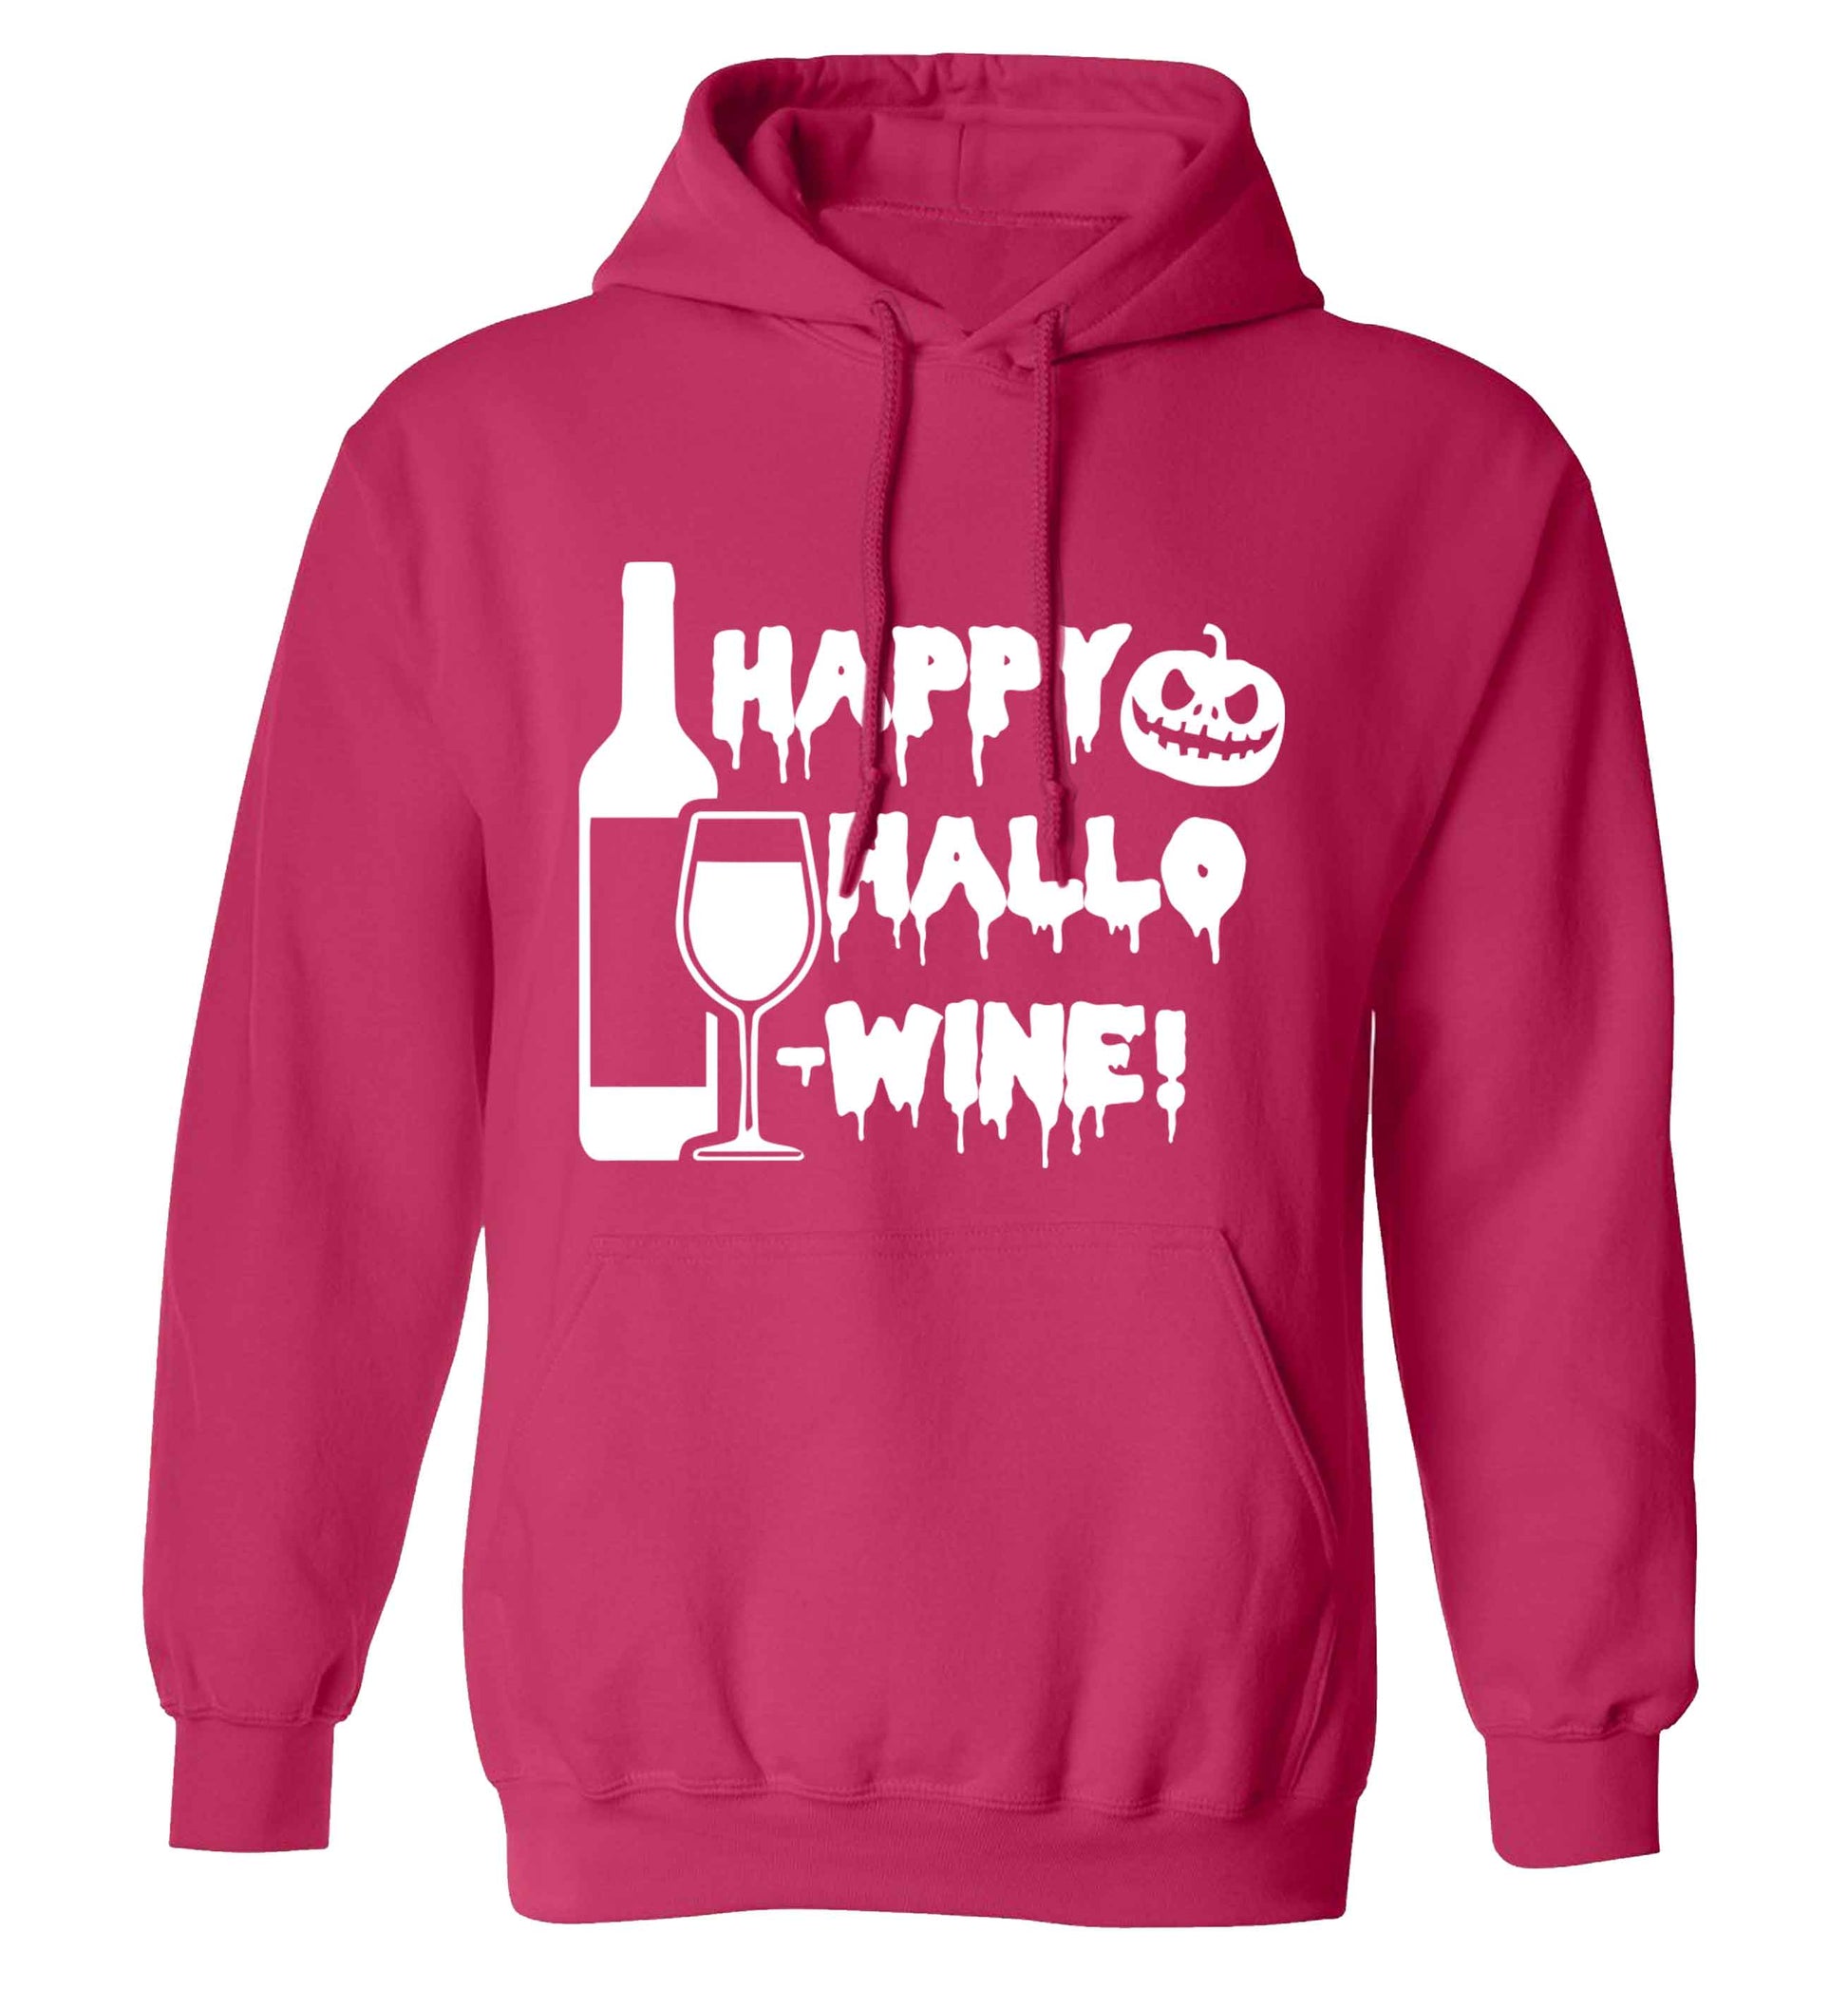 Happy hallow-wine adults unisex pink hoodie 2XL